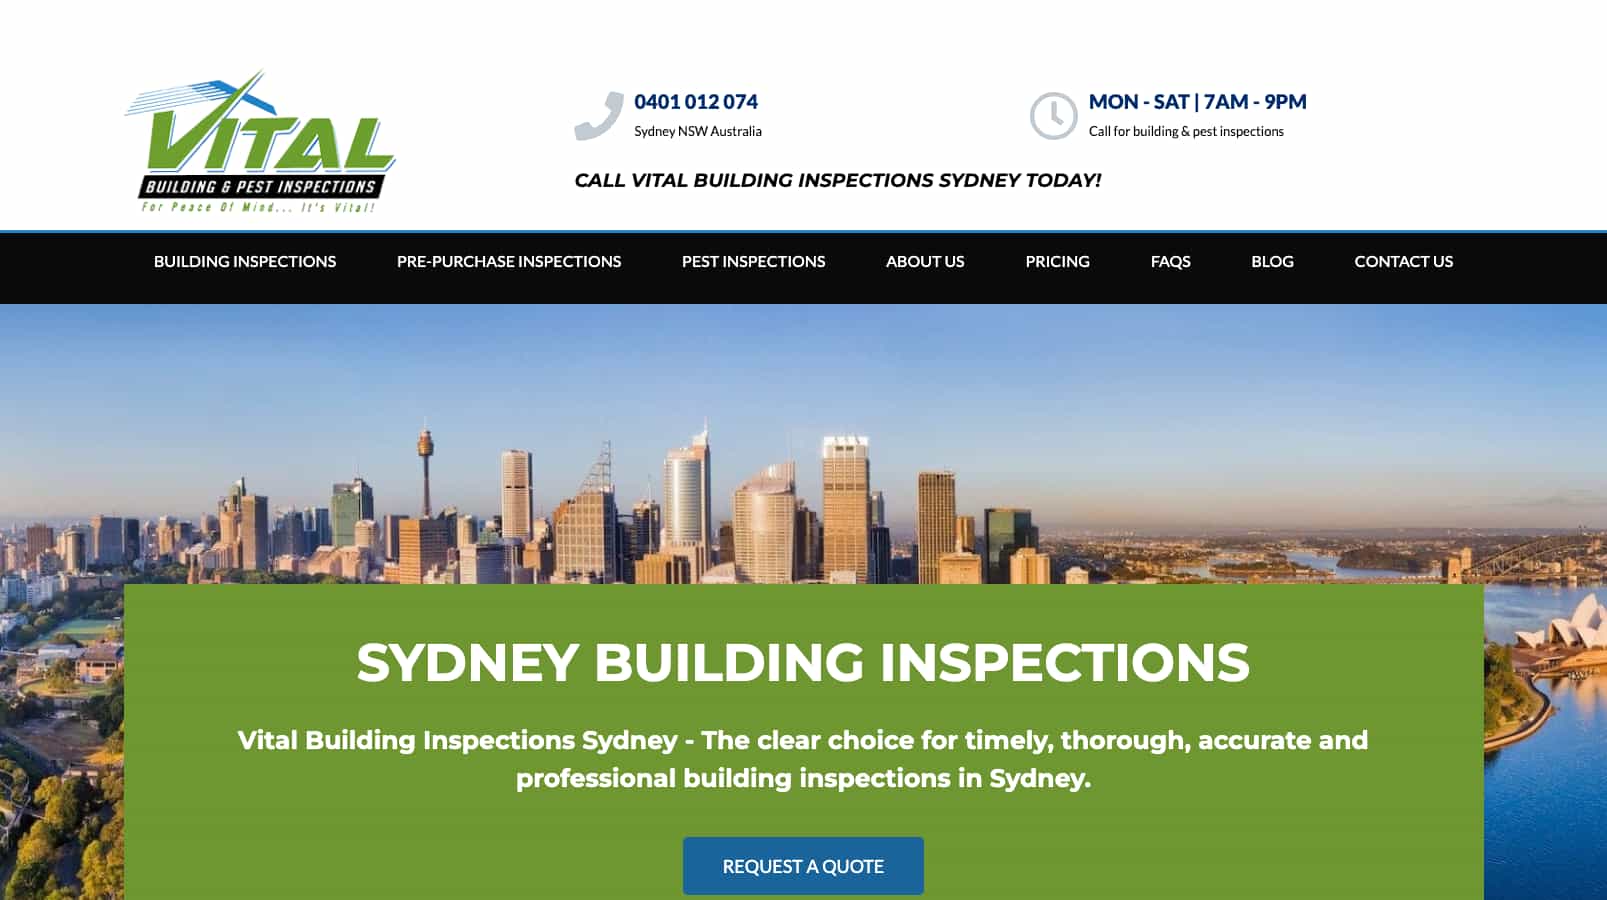 Vital Building Inspections Sydney & Pest Inspections Sydney